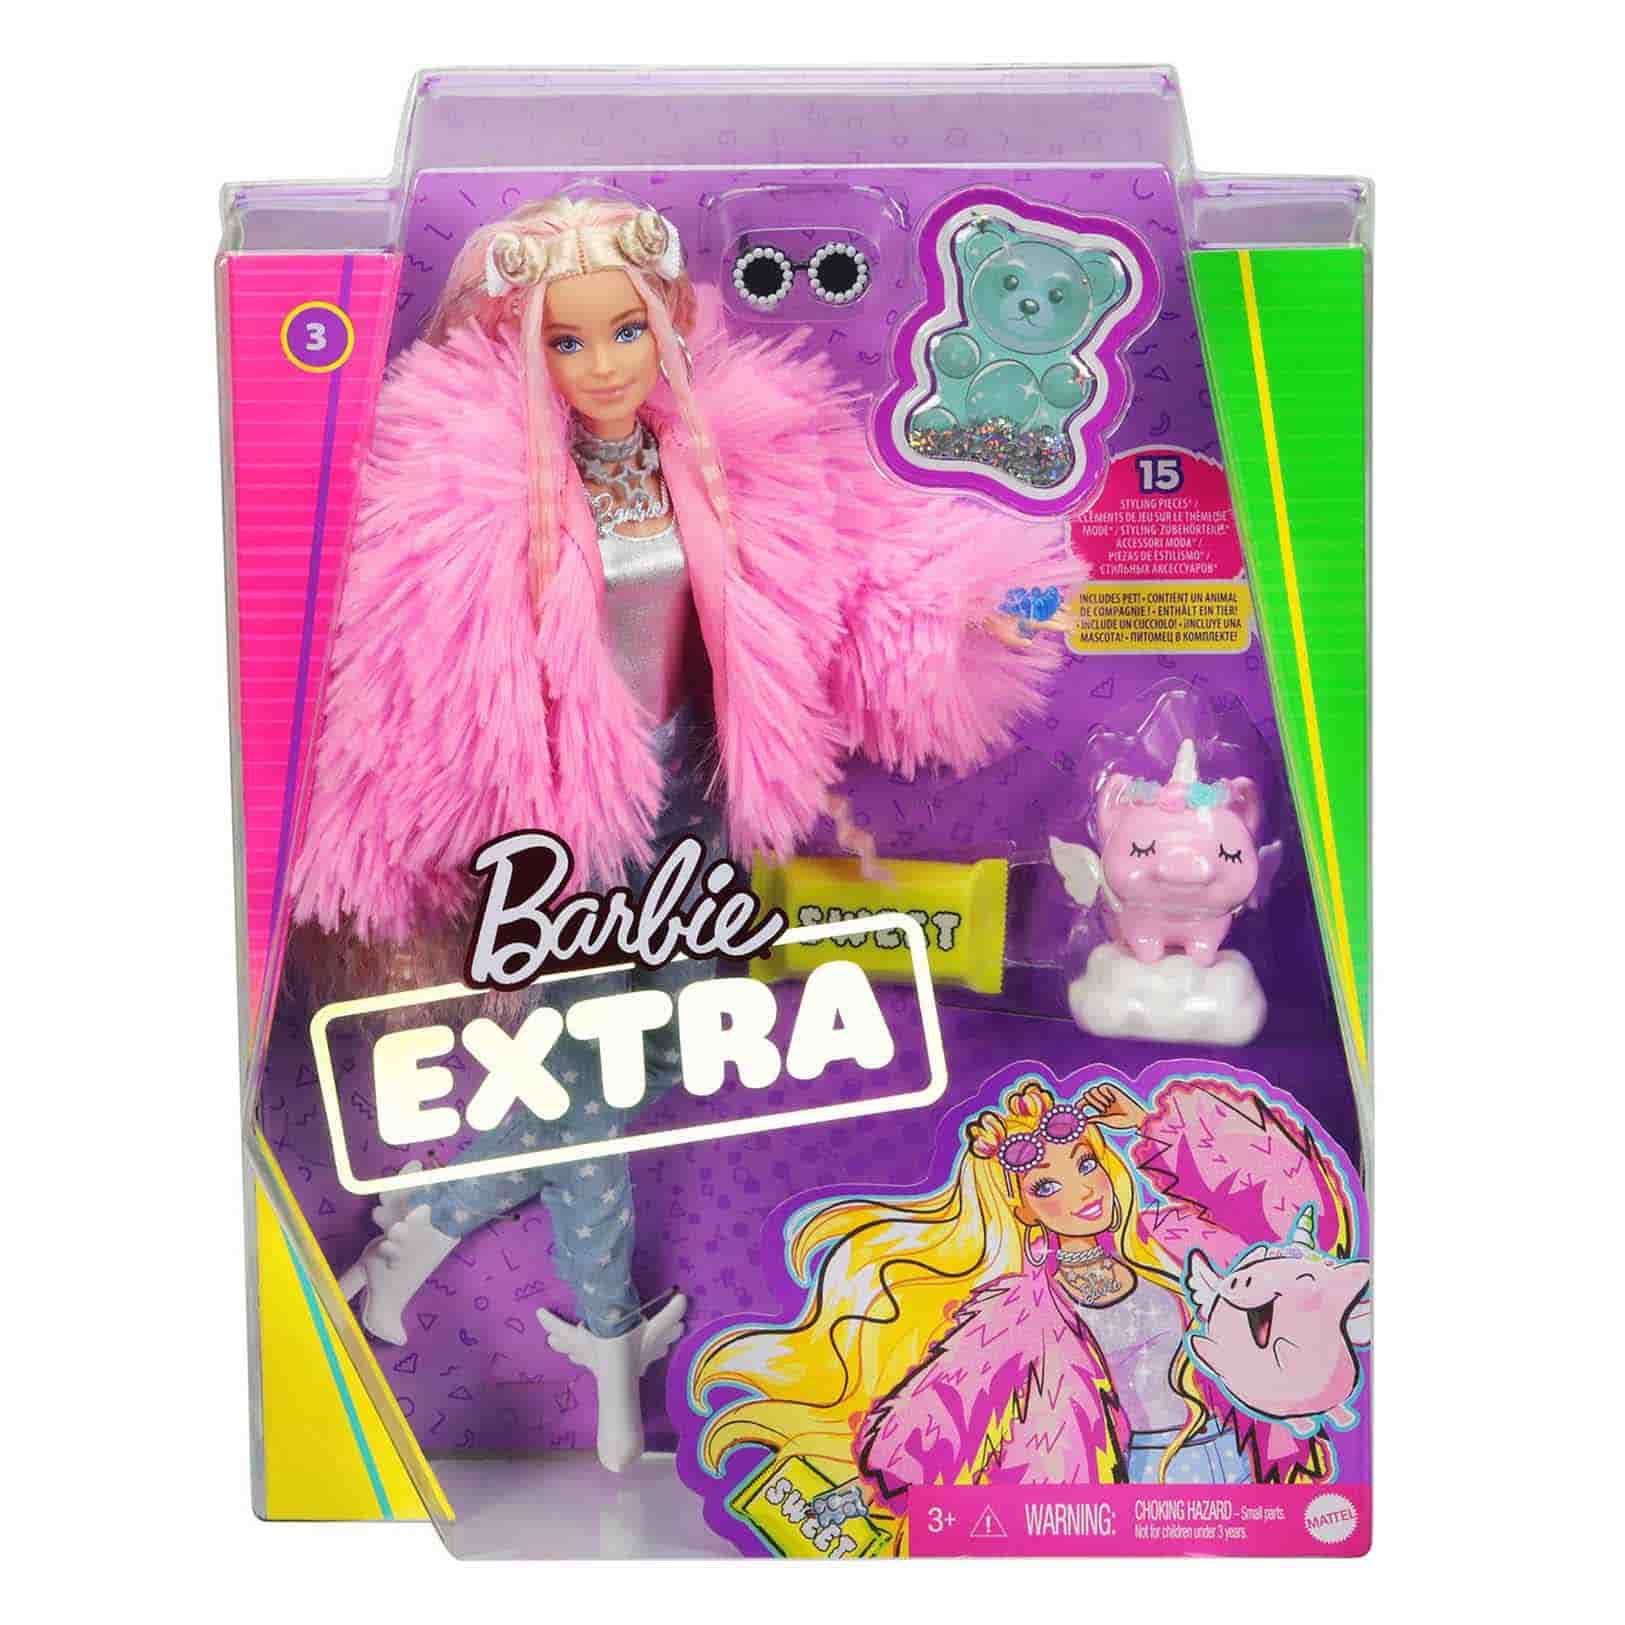 Barbie экстра grn28